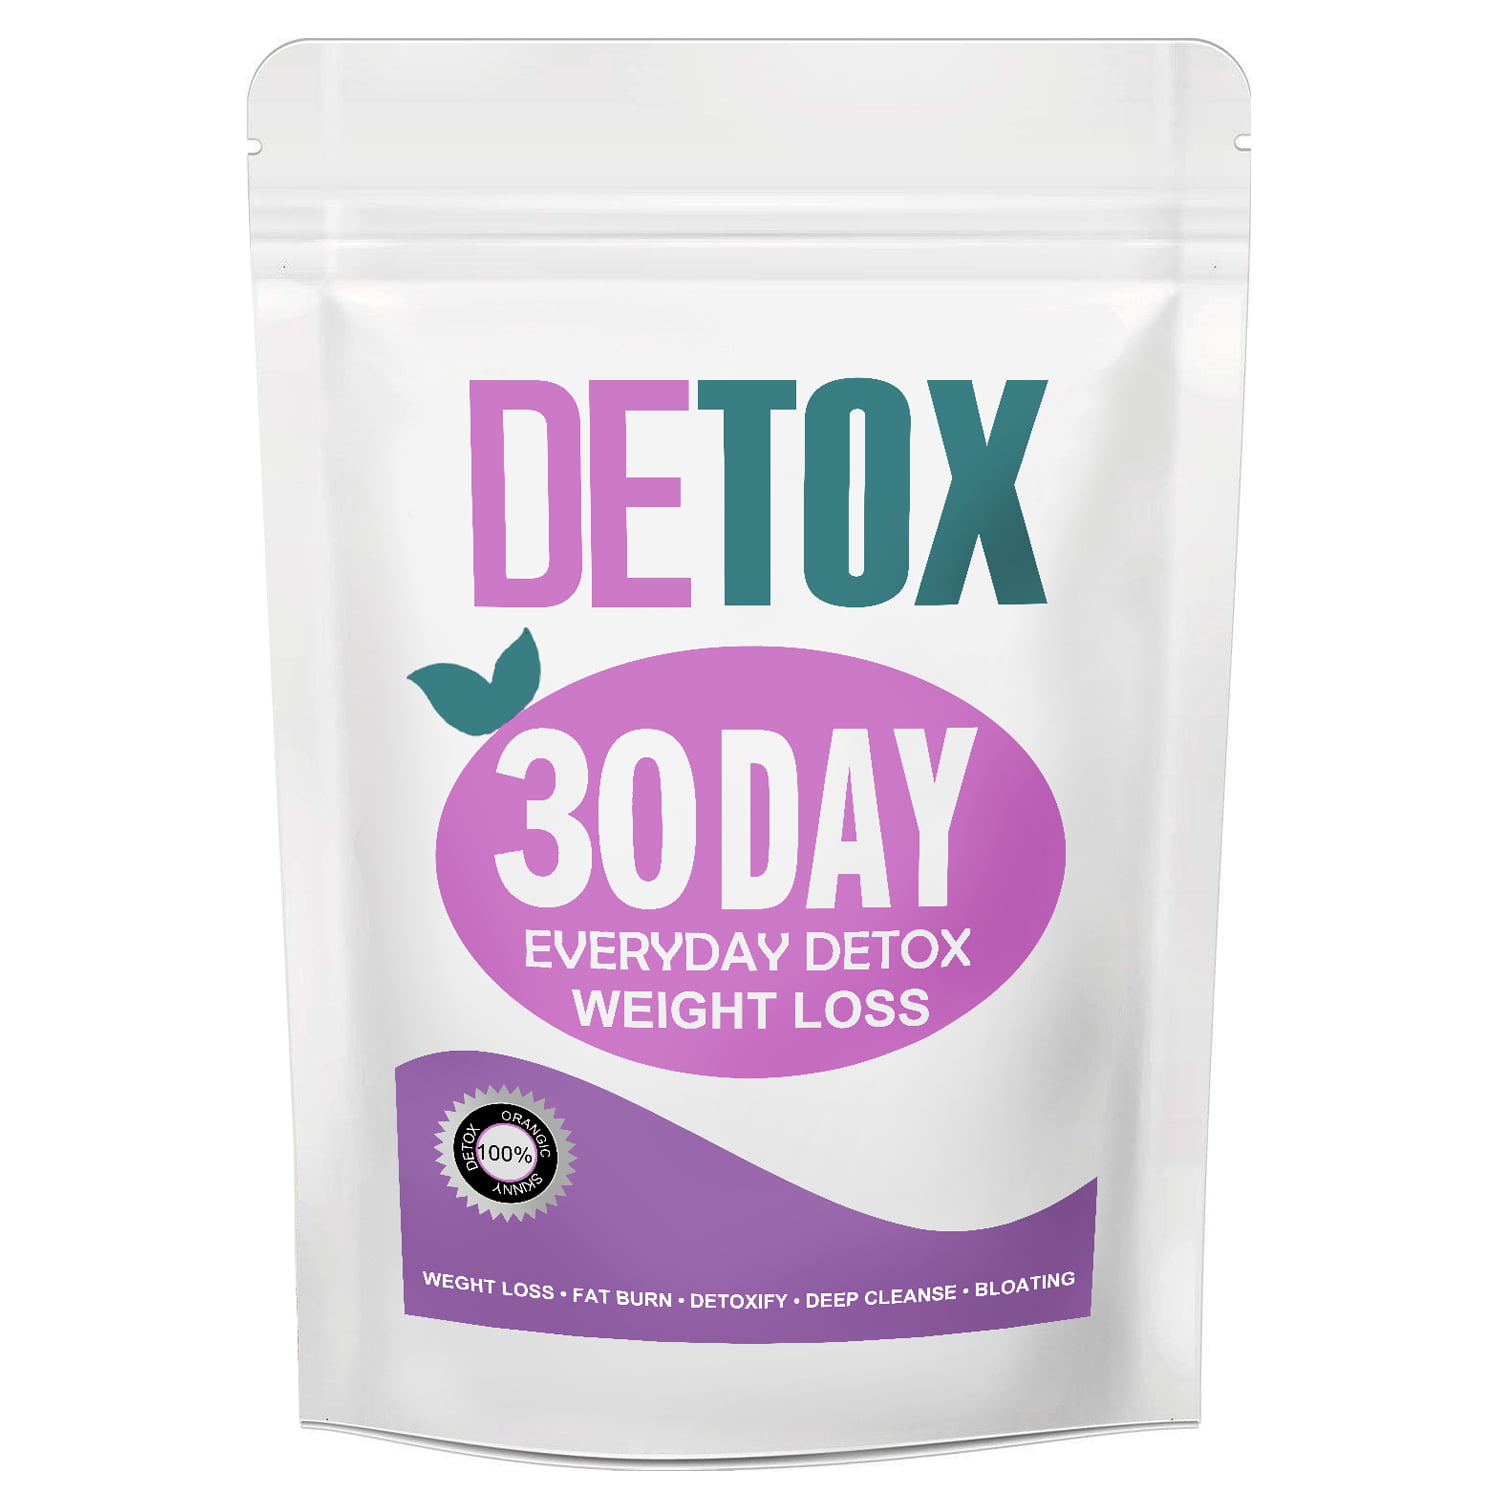 DETOX TEA Herbal tea Weight Loss Tea - 30 Day Skinny Slim Tea